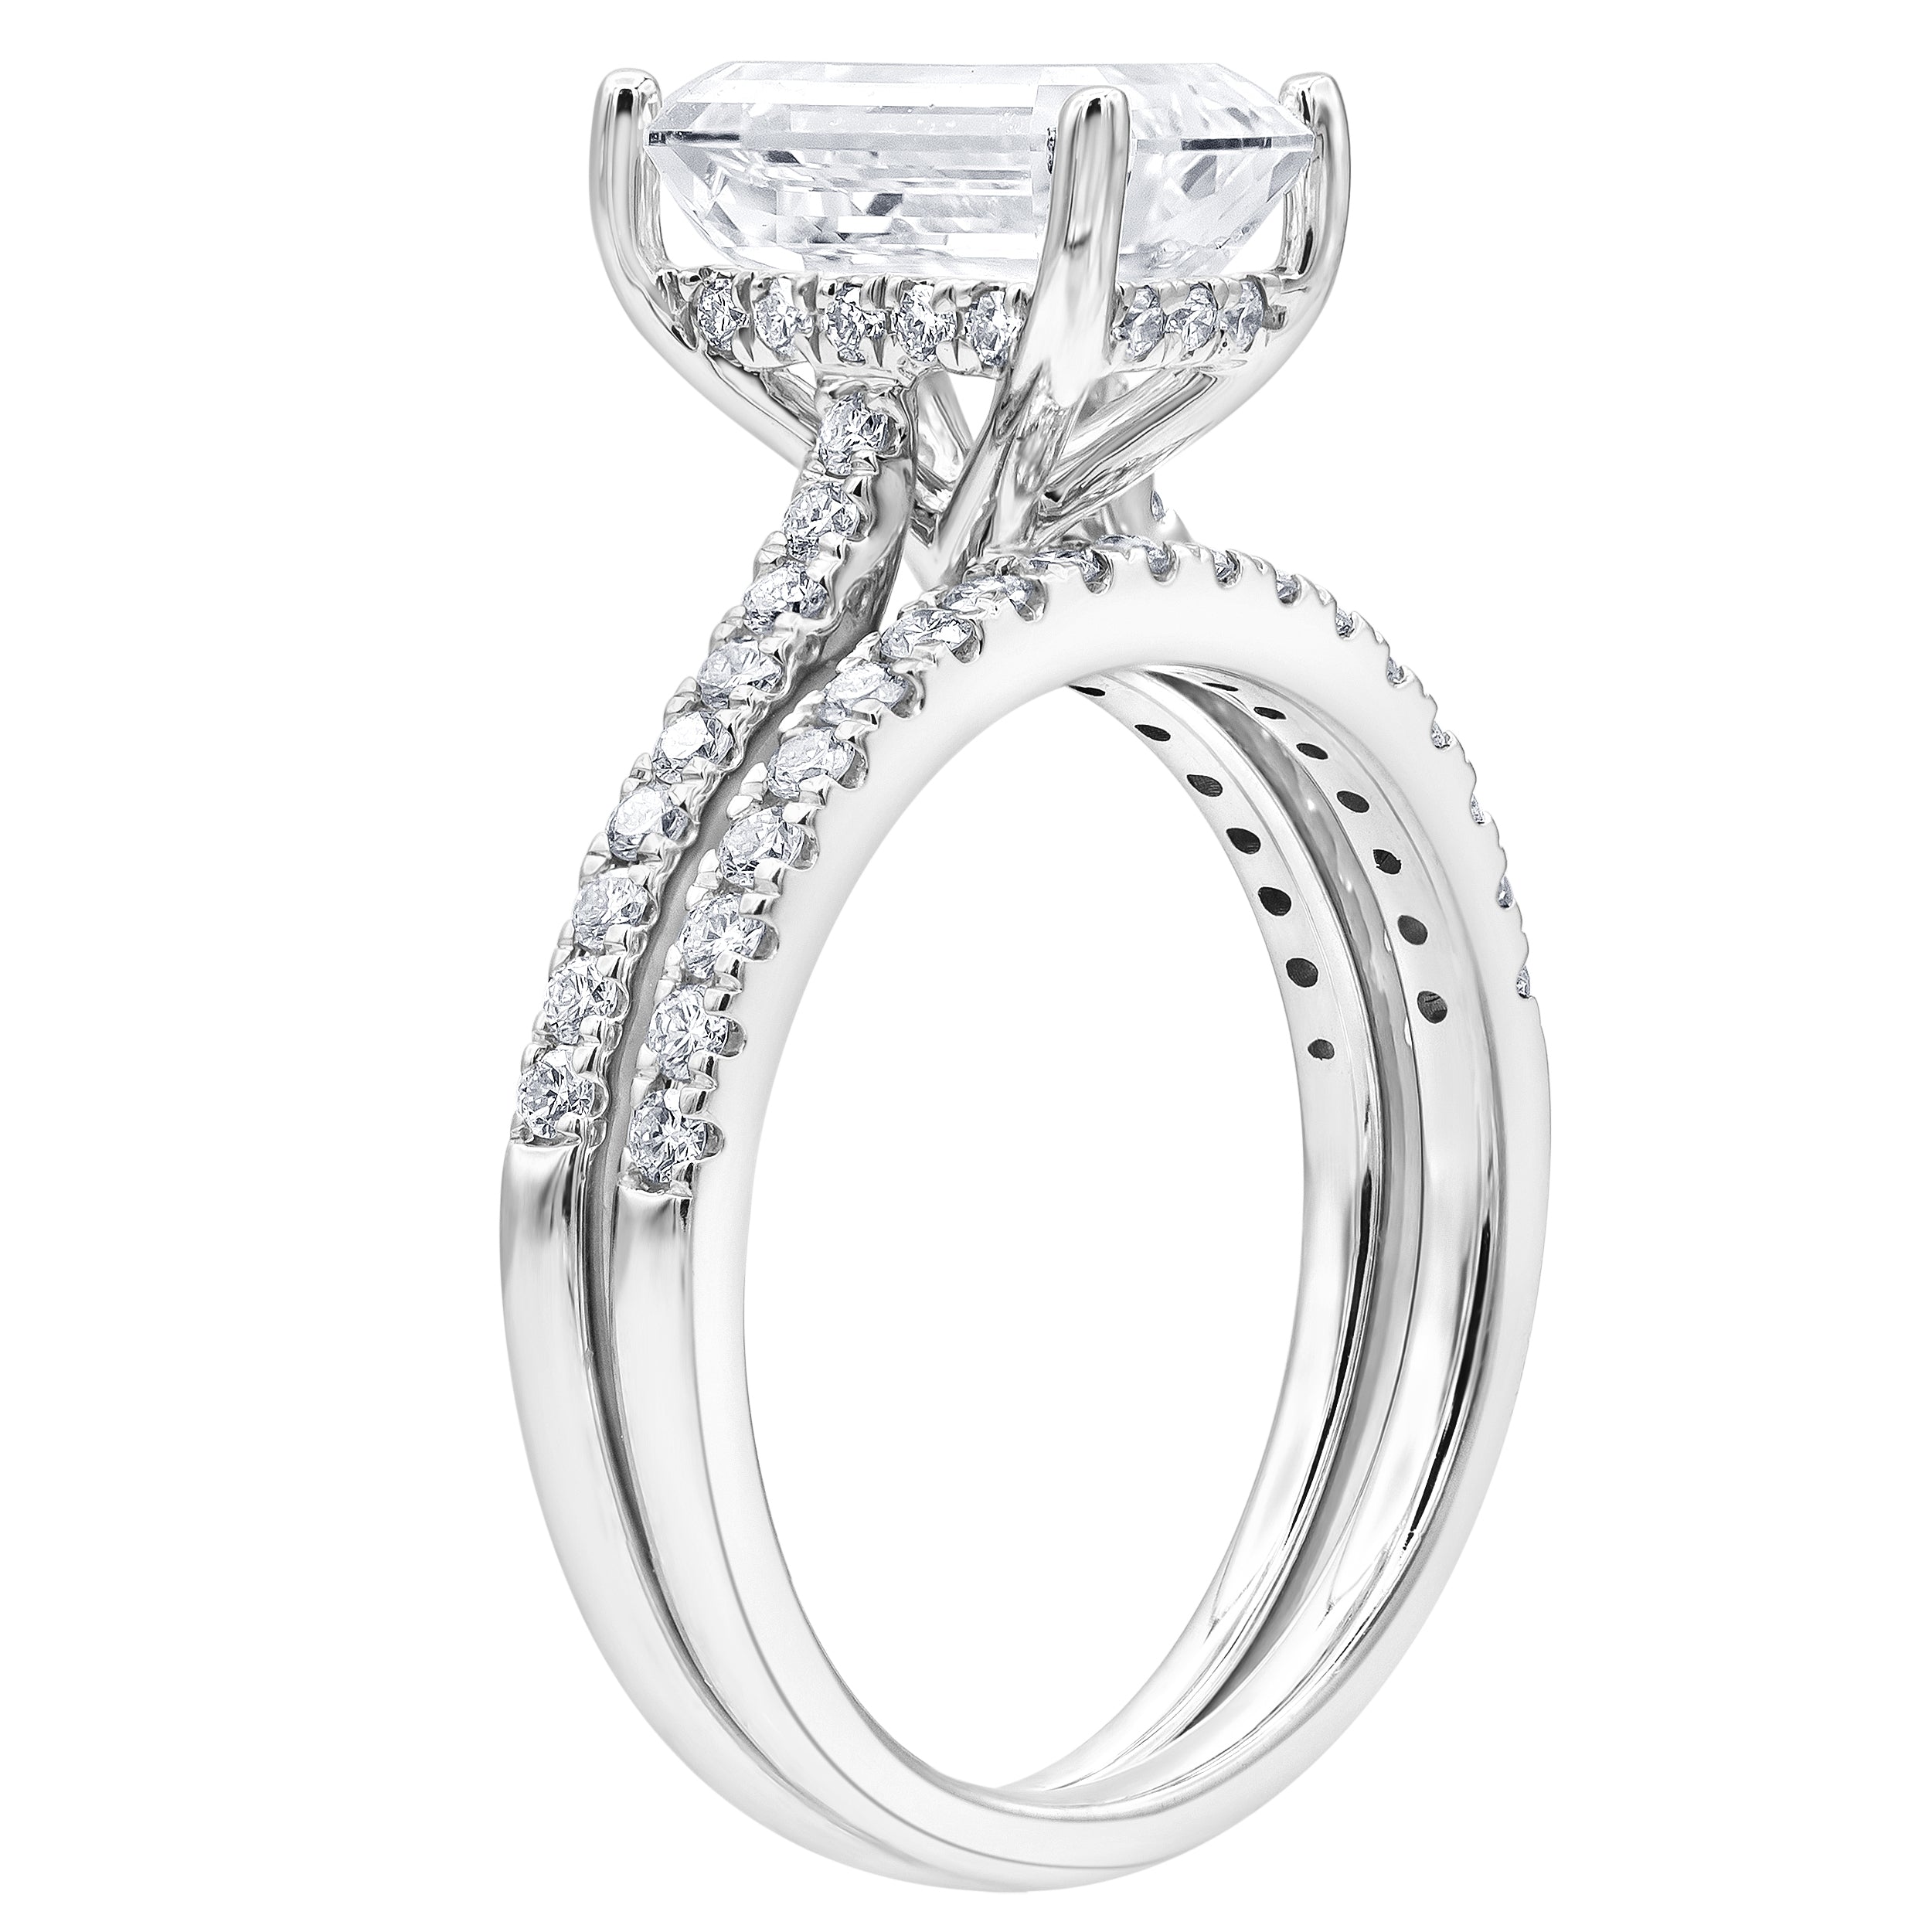 3.5 carat Emerald Cut Hidden Halo Diamond Ring